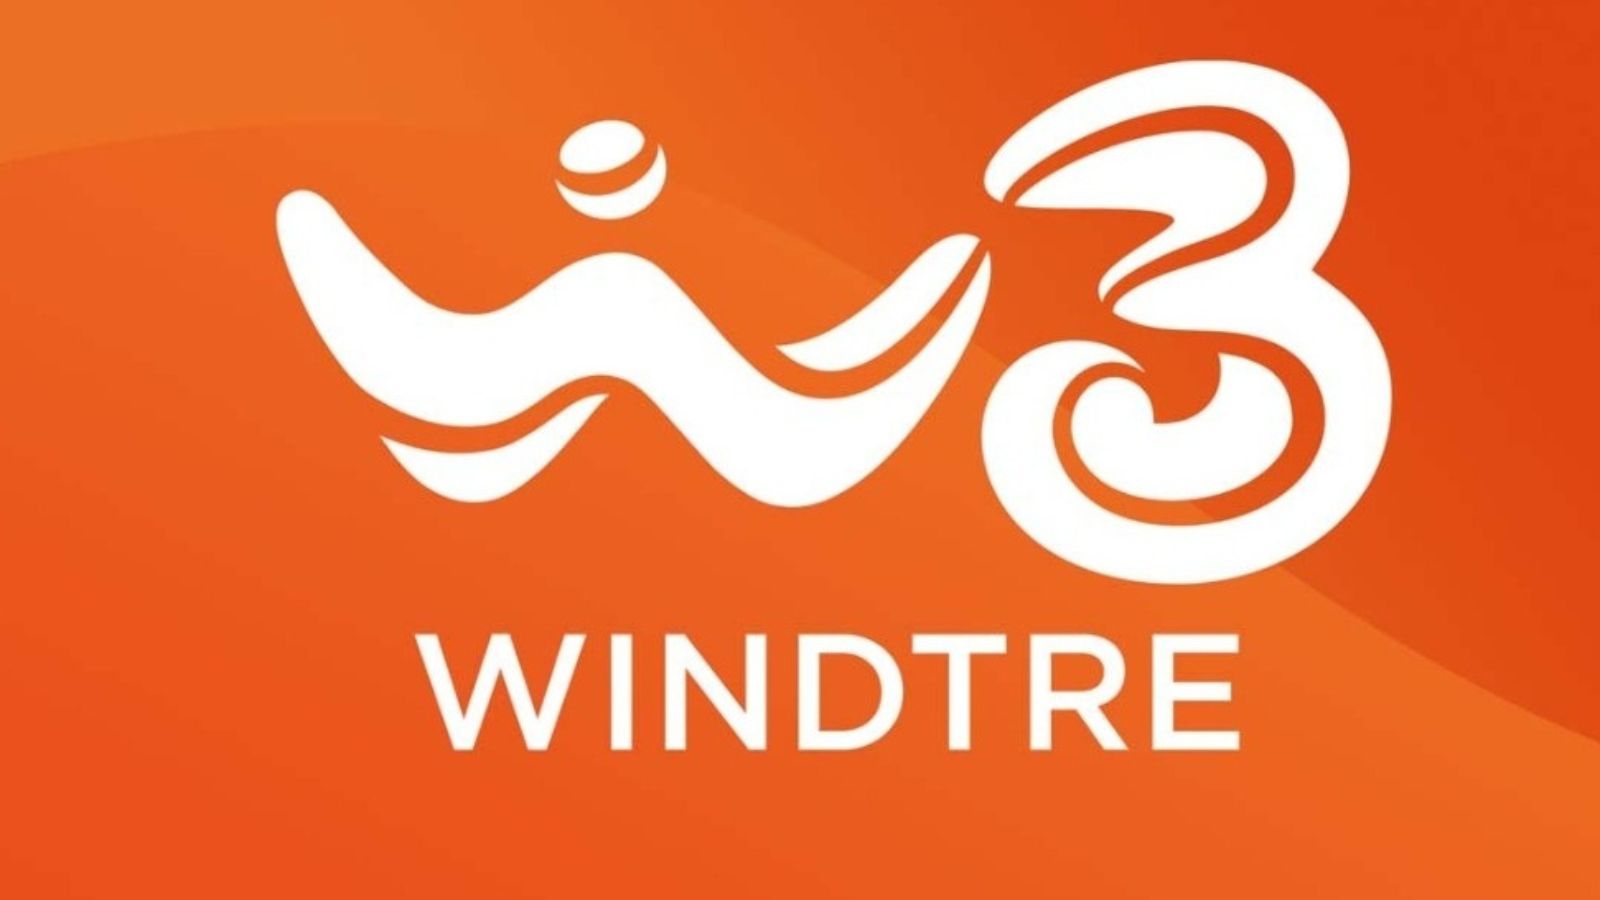 WindTre GO 150 m 5g nuova offerta 